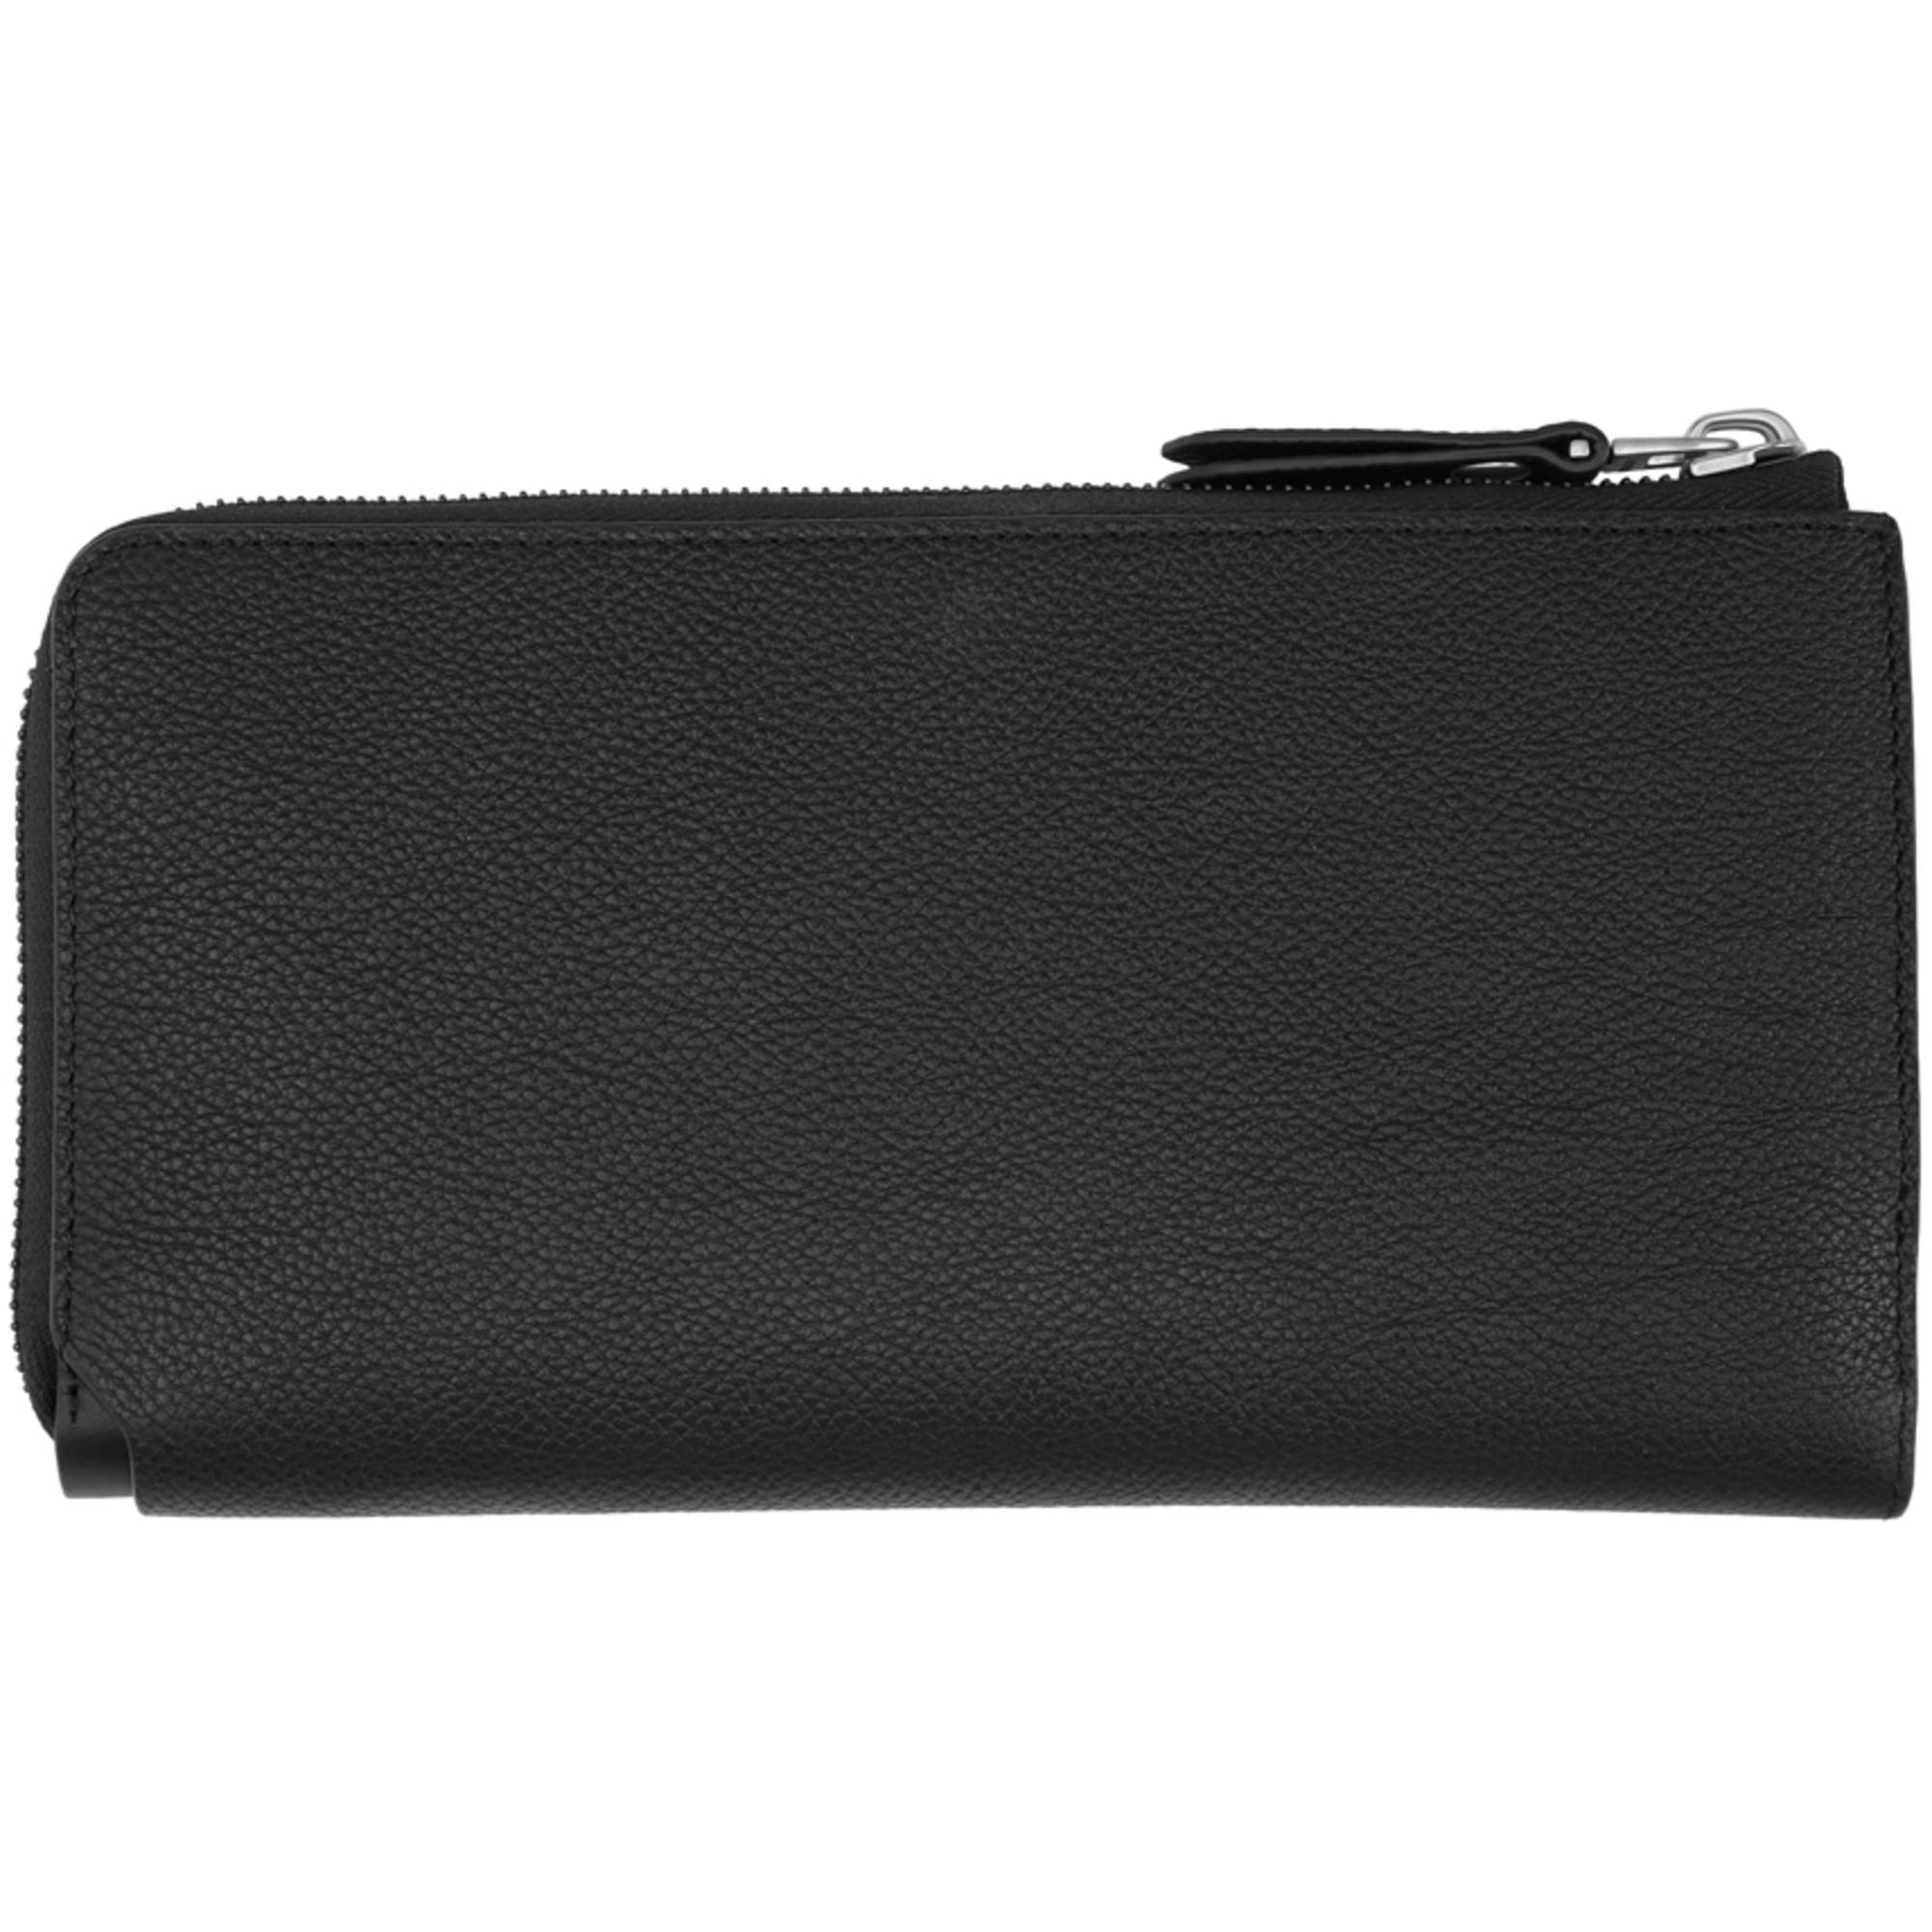 Lanvin Leather Black Zipped Wallet - Lyst